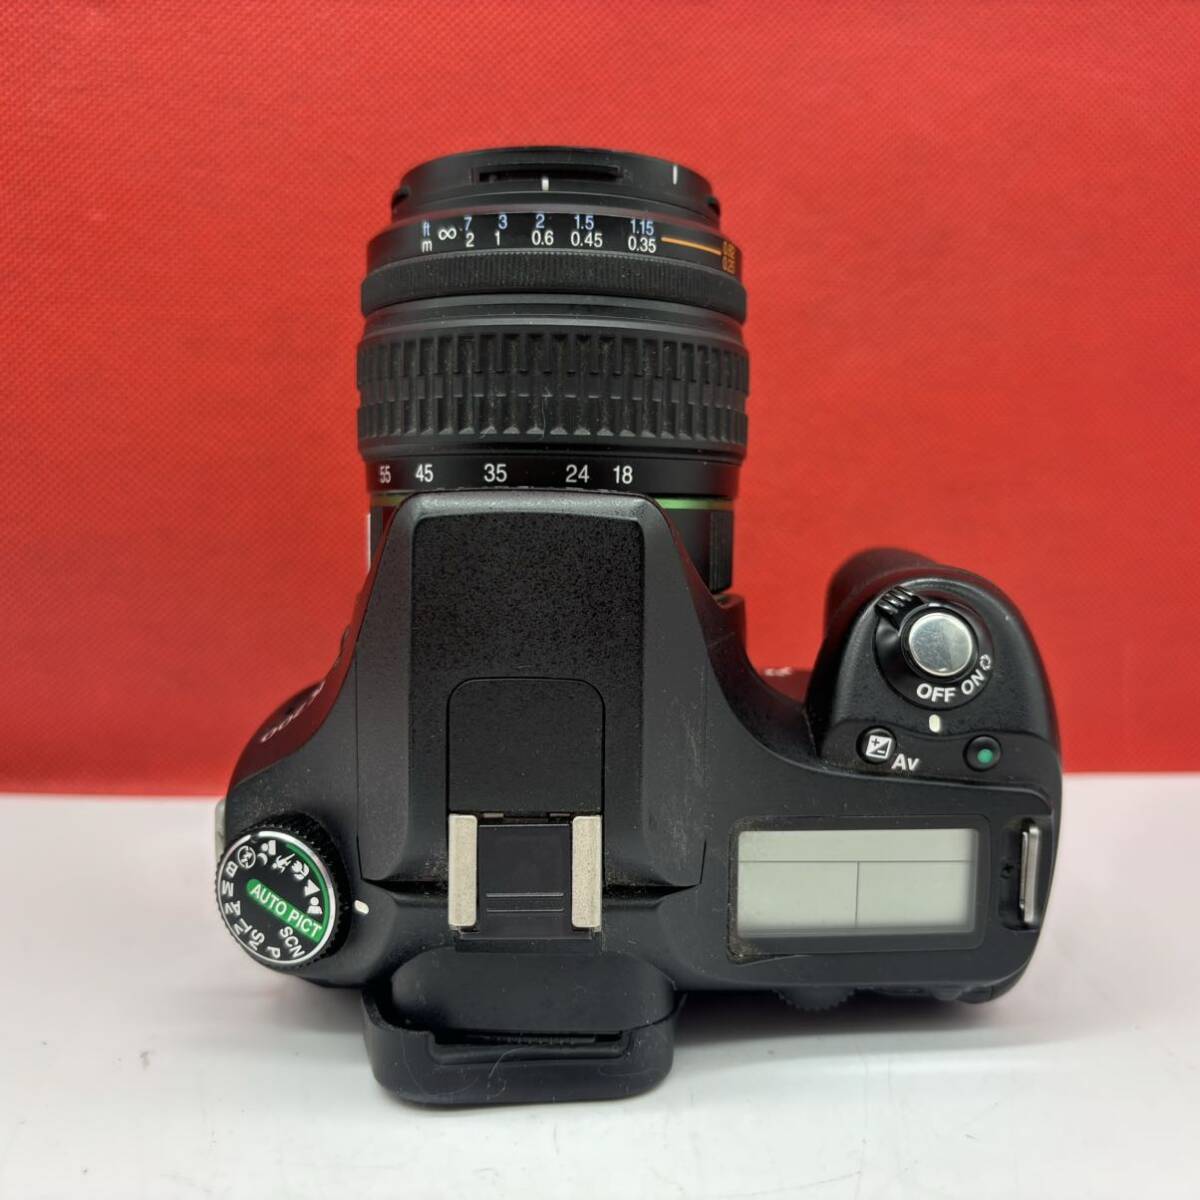 ◆ PENTAX K200 D デジタル一眼レフカメラ ボディ smc pentax-DA F3.5-5.6 18-55mm ALⅡ レンズ ボディジャンク レンズ動作OK ペンタックスの画像5